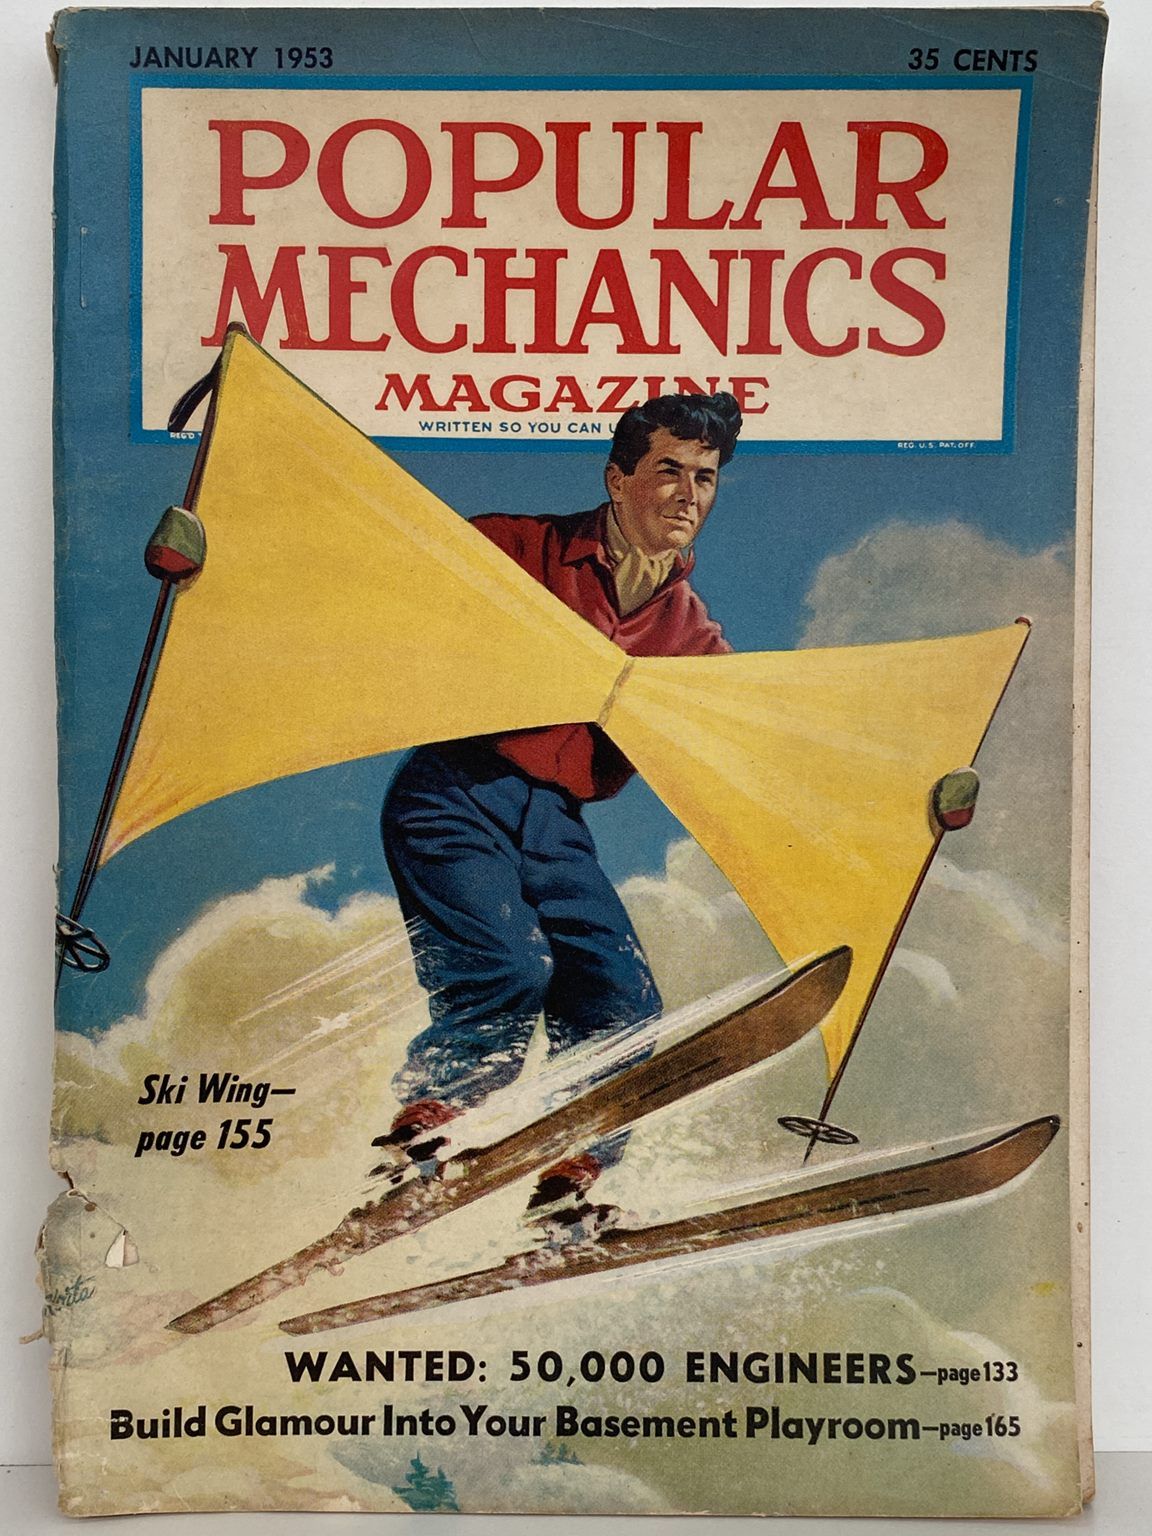 VINTAGE MAGAZINE: Popular Mechanics - Vol. 99, No. 1 - January 1953